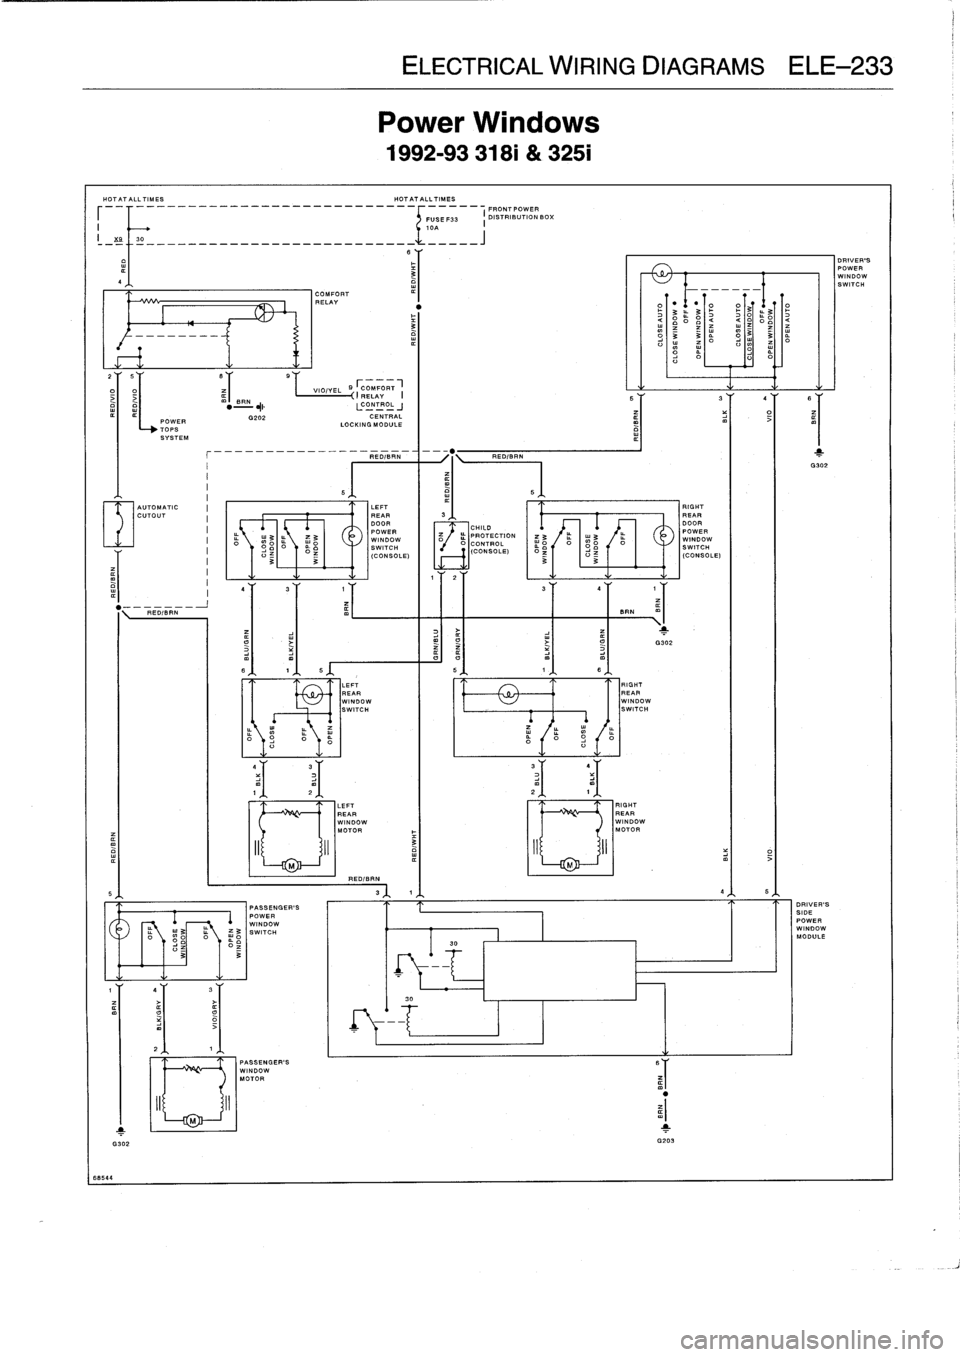 BMW 325i 1993 E36 Workshop Manual 
HO7A7AlL71ME5

	

HOTATALLTIMES

r
--

68544

i

*---AAA
POWER

AUTOMATIC
CUTOUT

O

PASSENGERS
WINDOWMOTOR

V
1
G3D2

B
r
COMFDRT~
VIOIYEL
(IRELAY
I

ELECTRICAL
WIRING
DIAGRAMS
ELE-233

Power
Windo